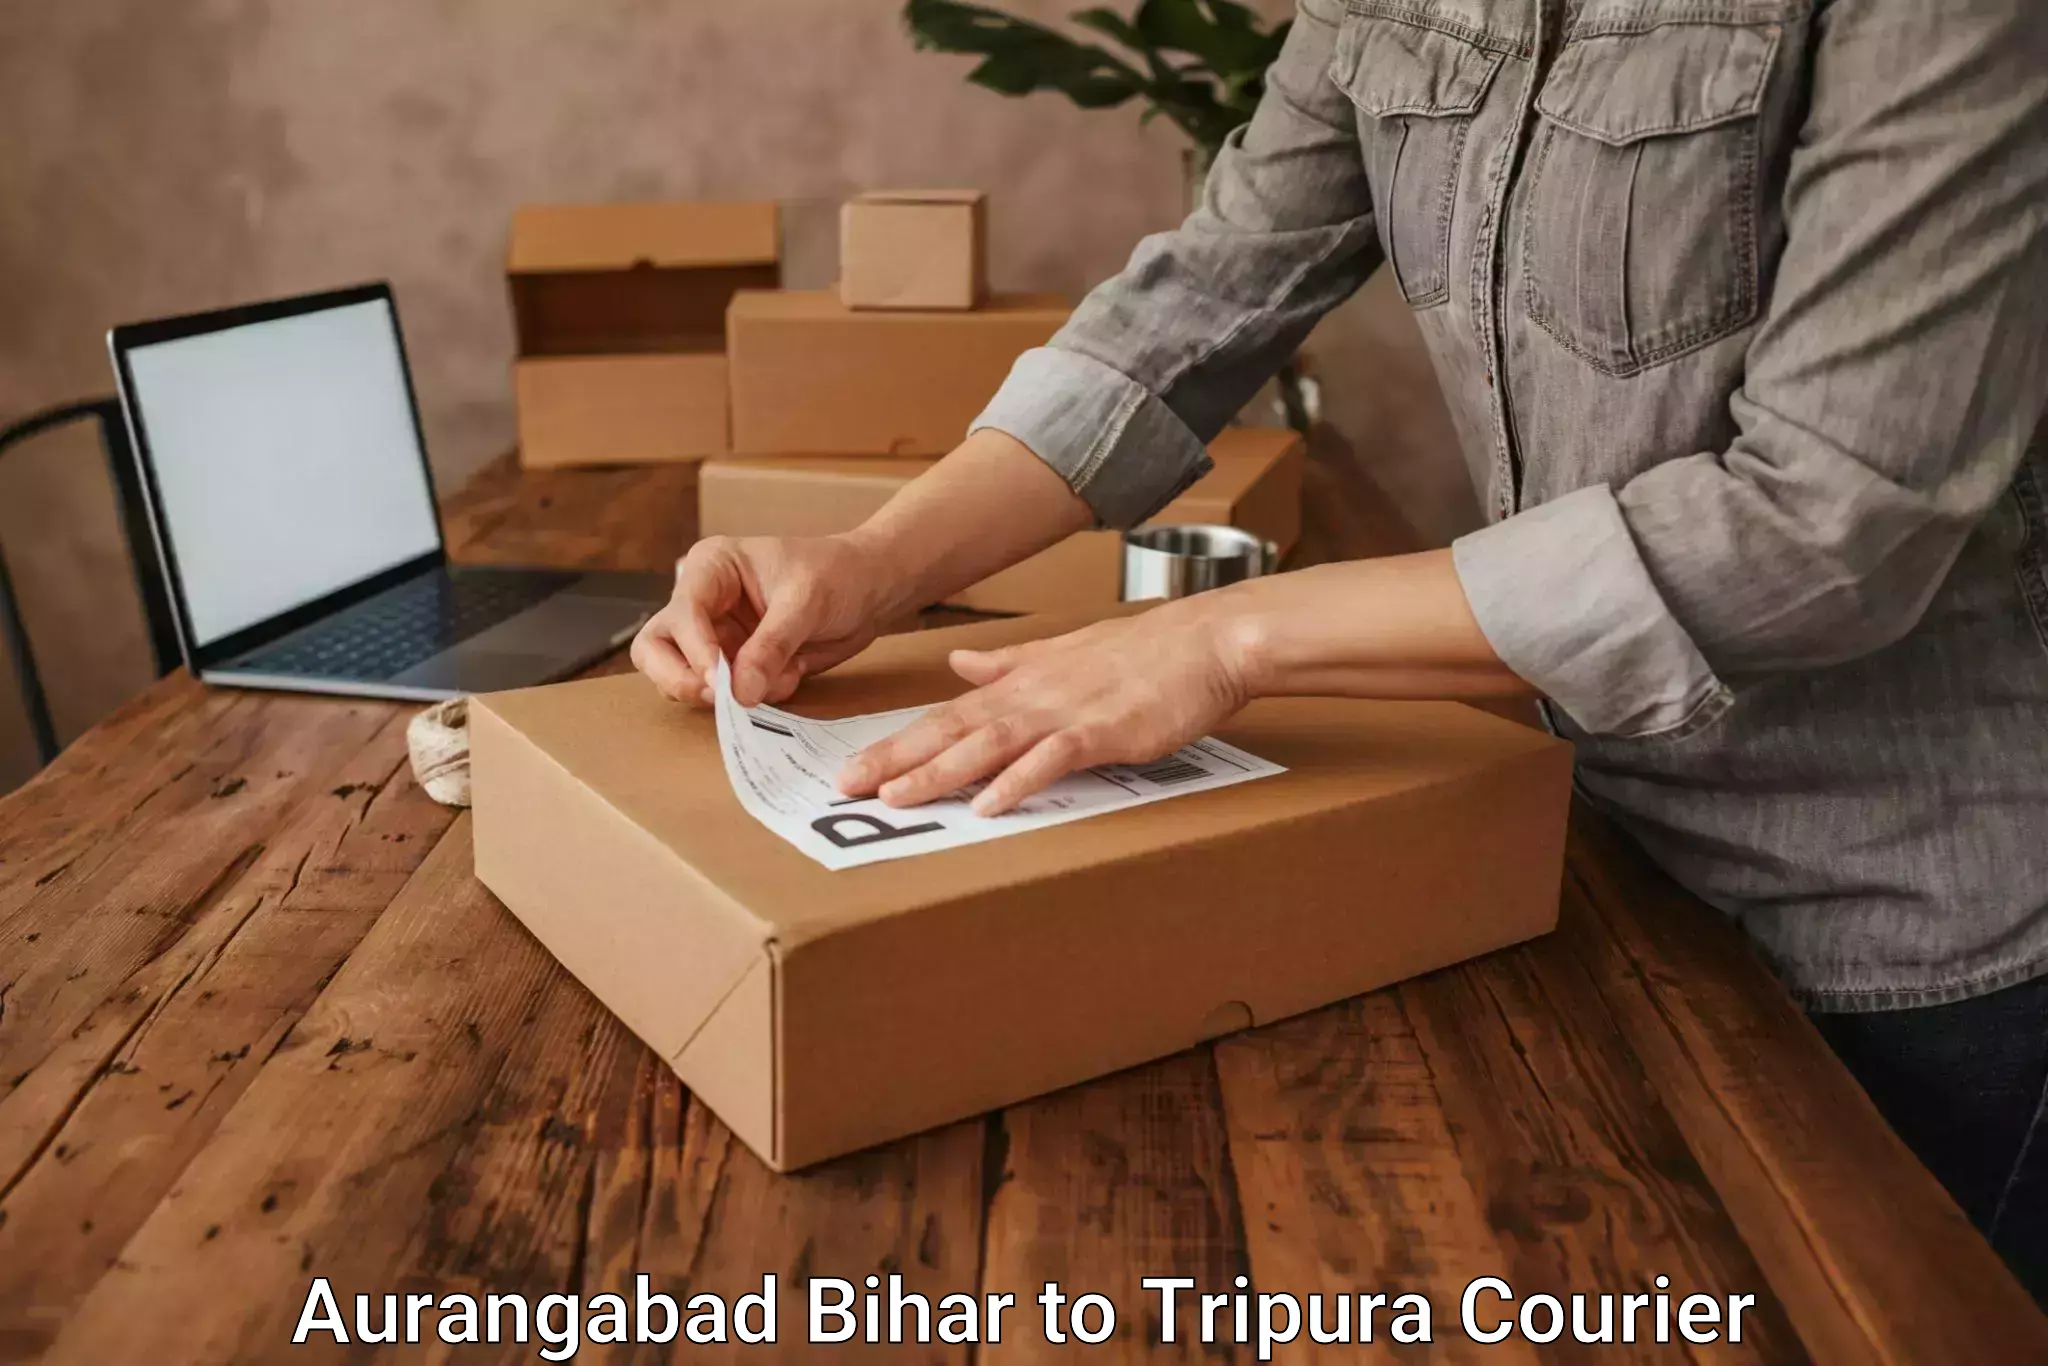 Trusted moving company Aurangabad Bihar to Dharmanagar